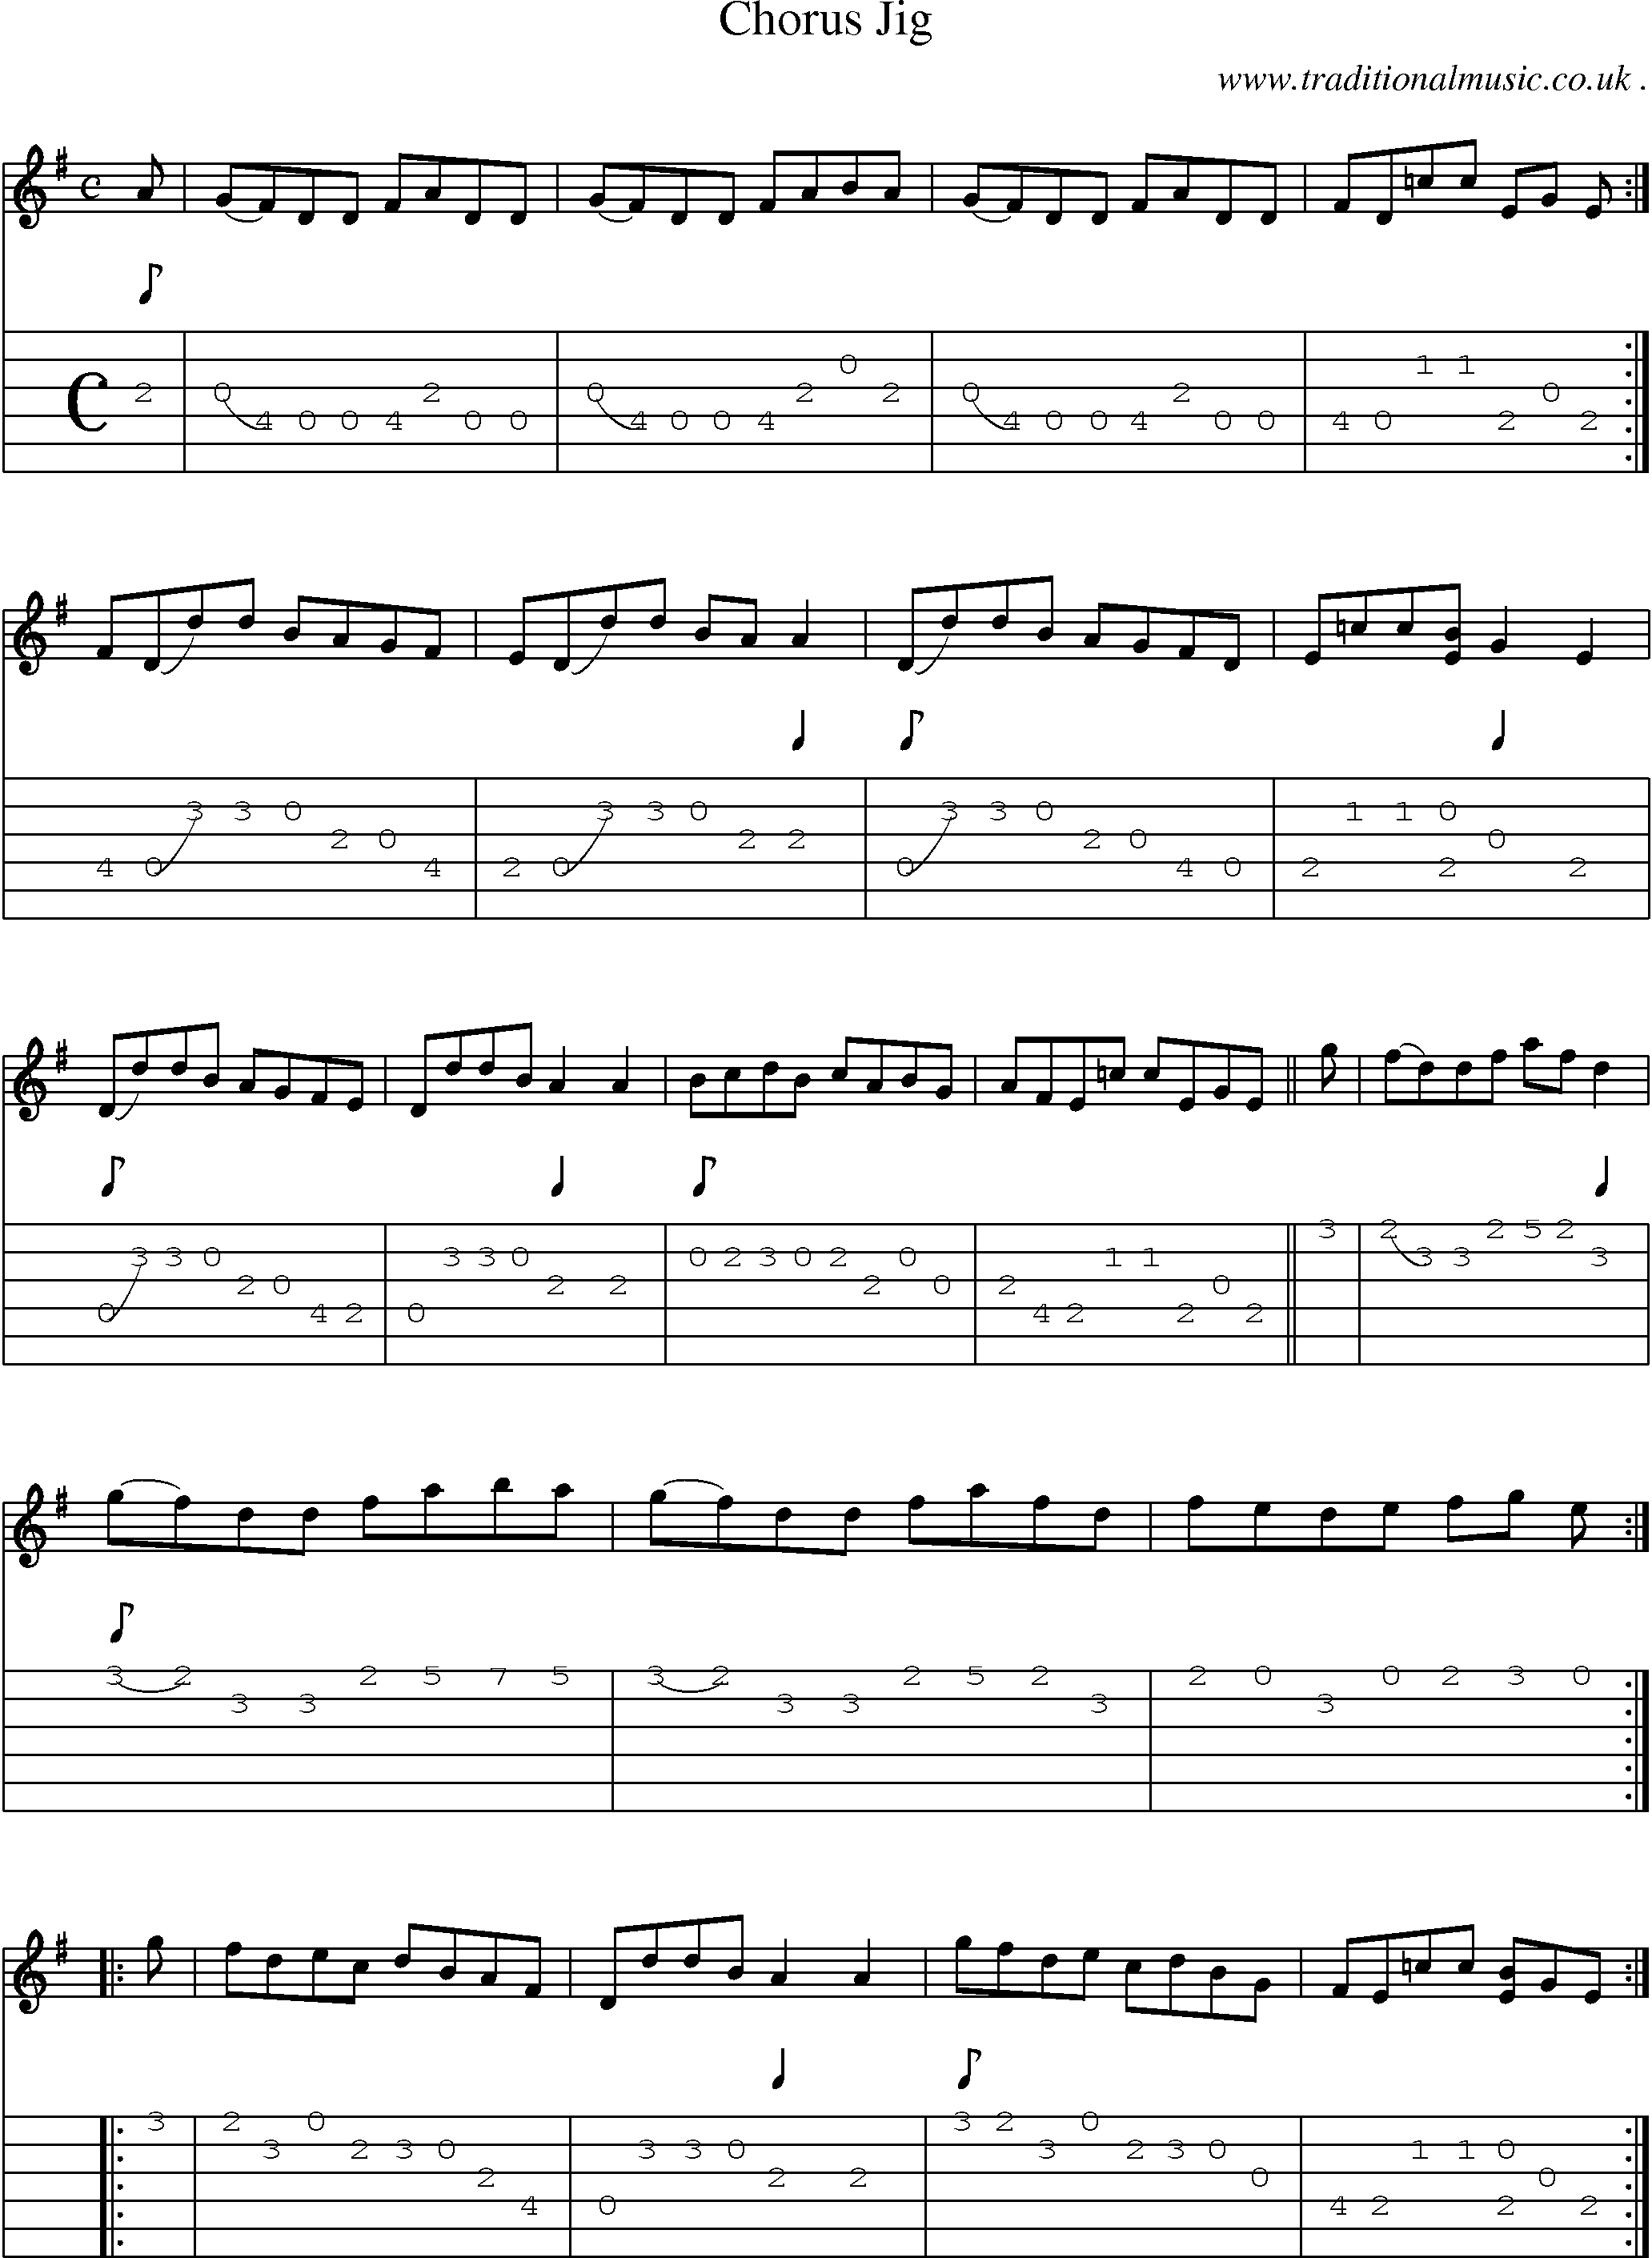 Sheet-music  score, Chords and Guitar Tabs for Chorus Jig